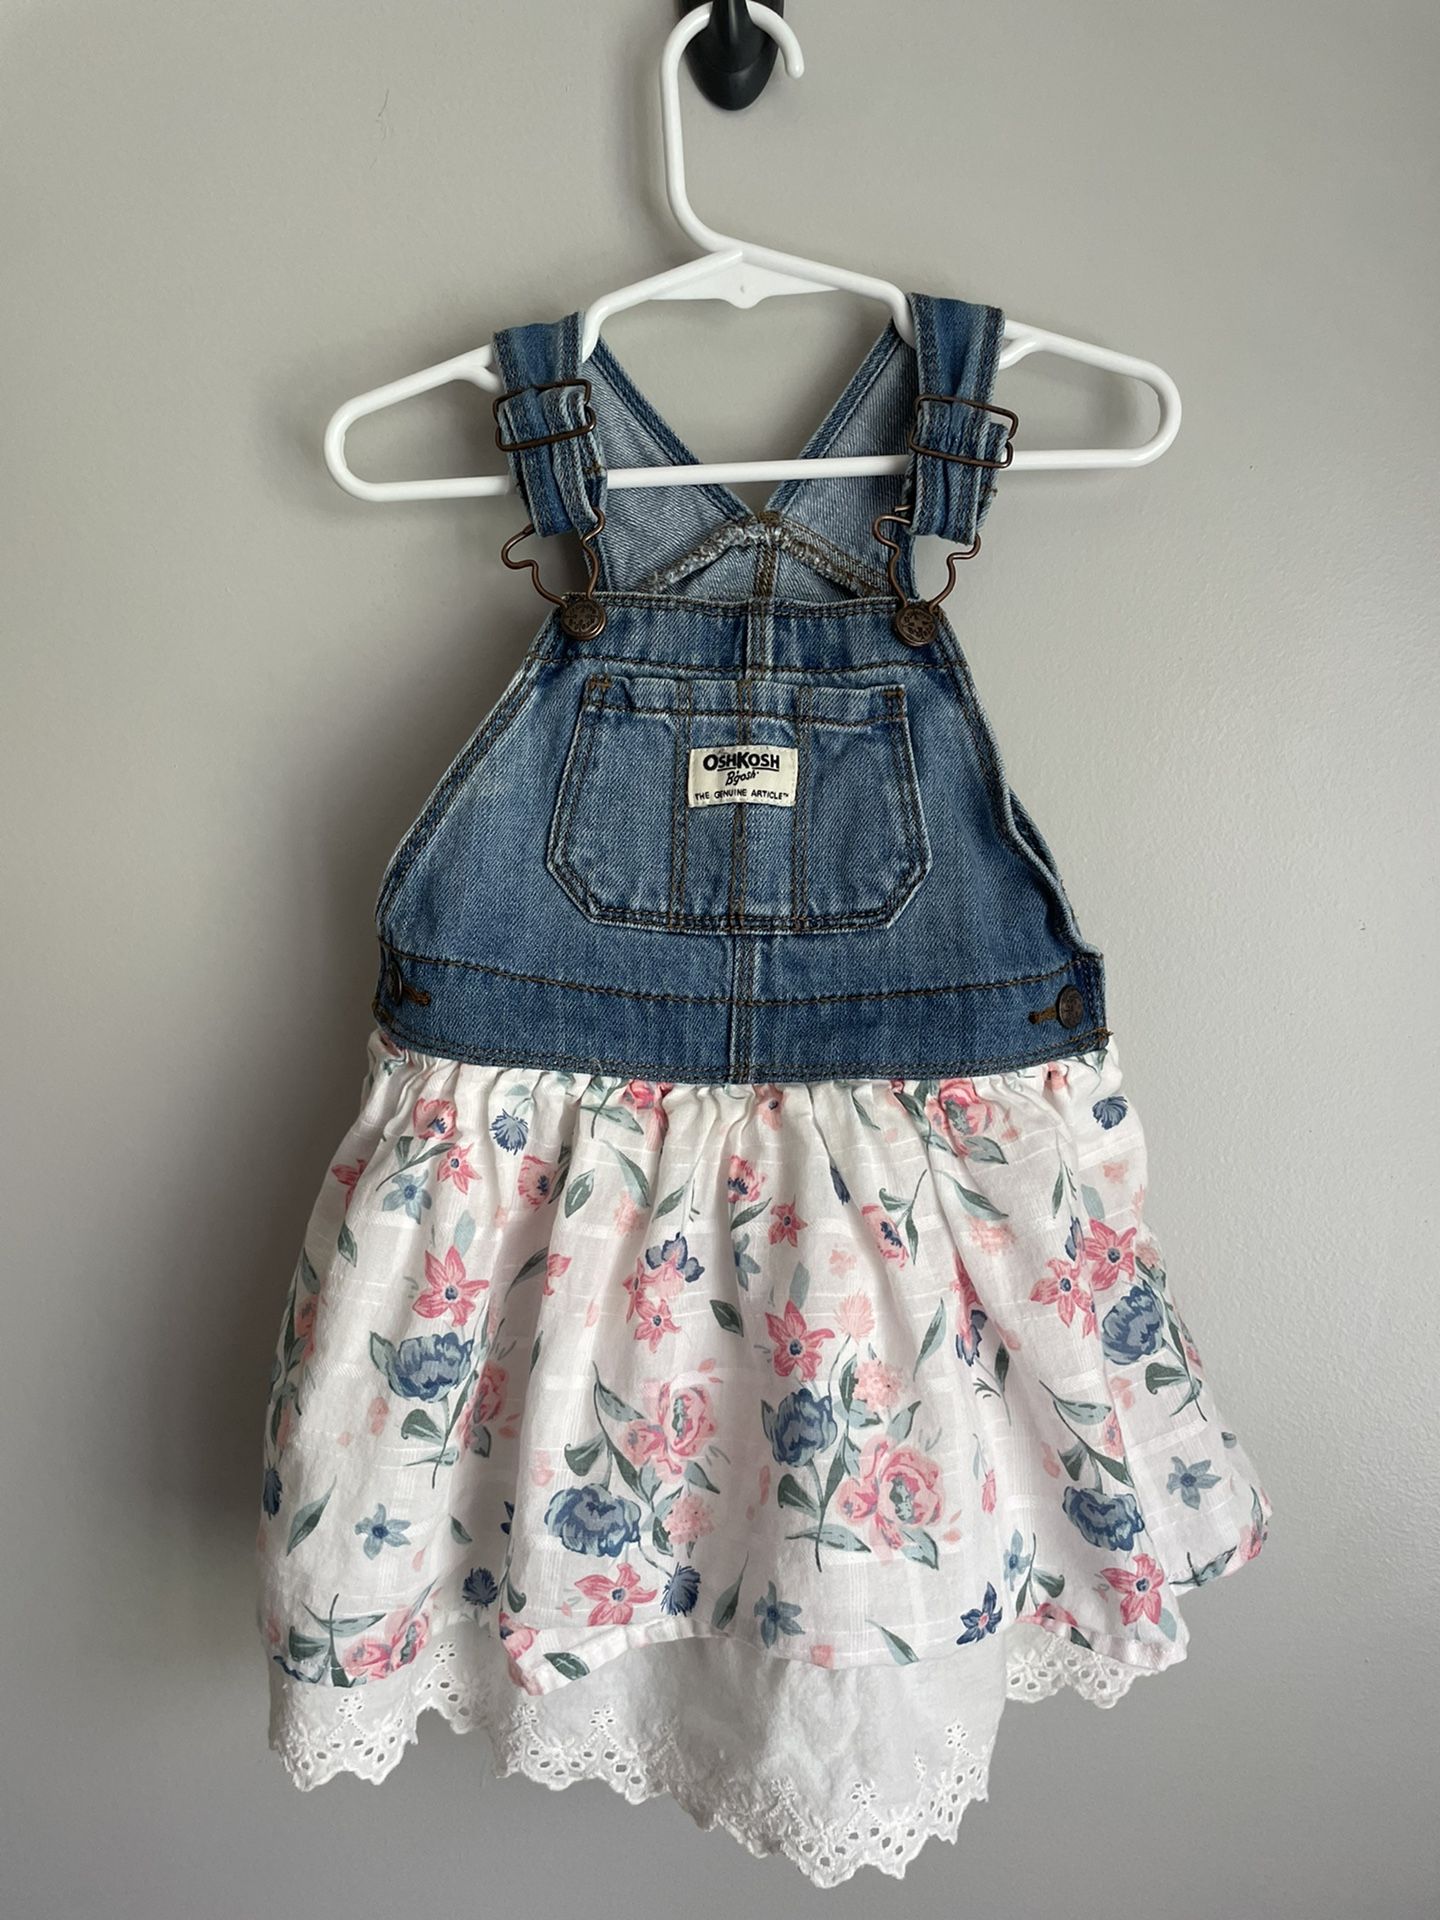 Oshkosh Denim Overall Dress Floral Eyelet Lace Skirt Baby Girl 18-24 Months